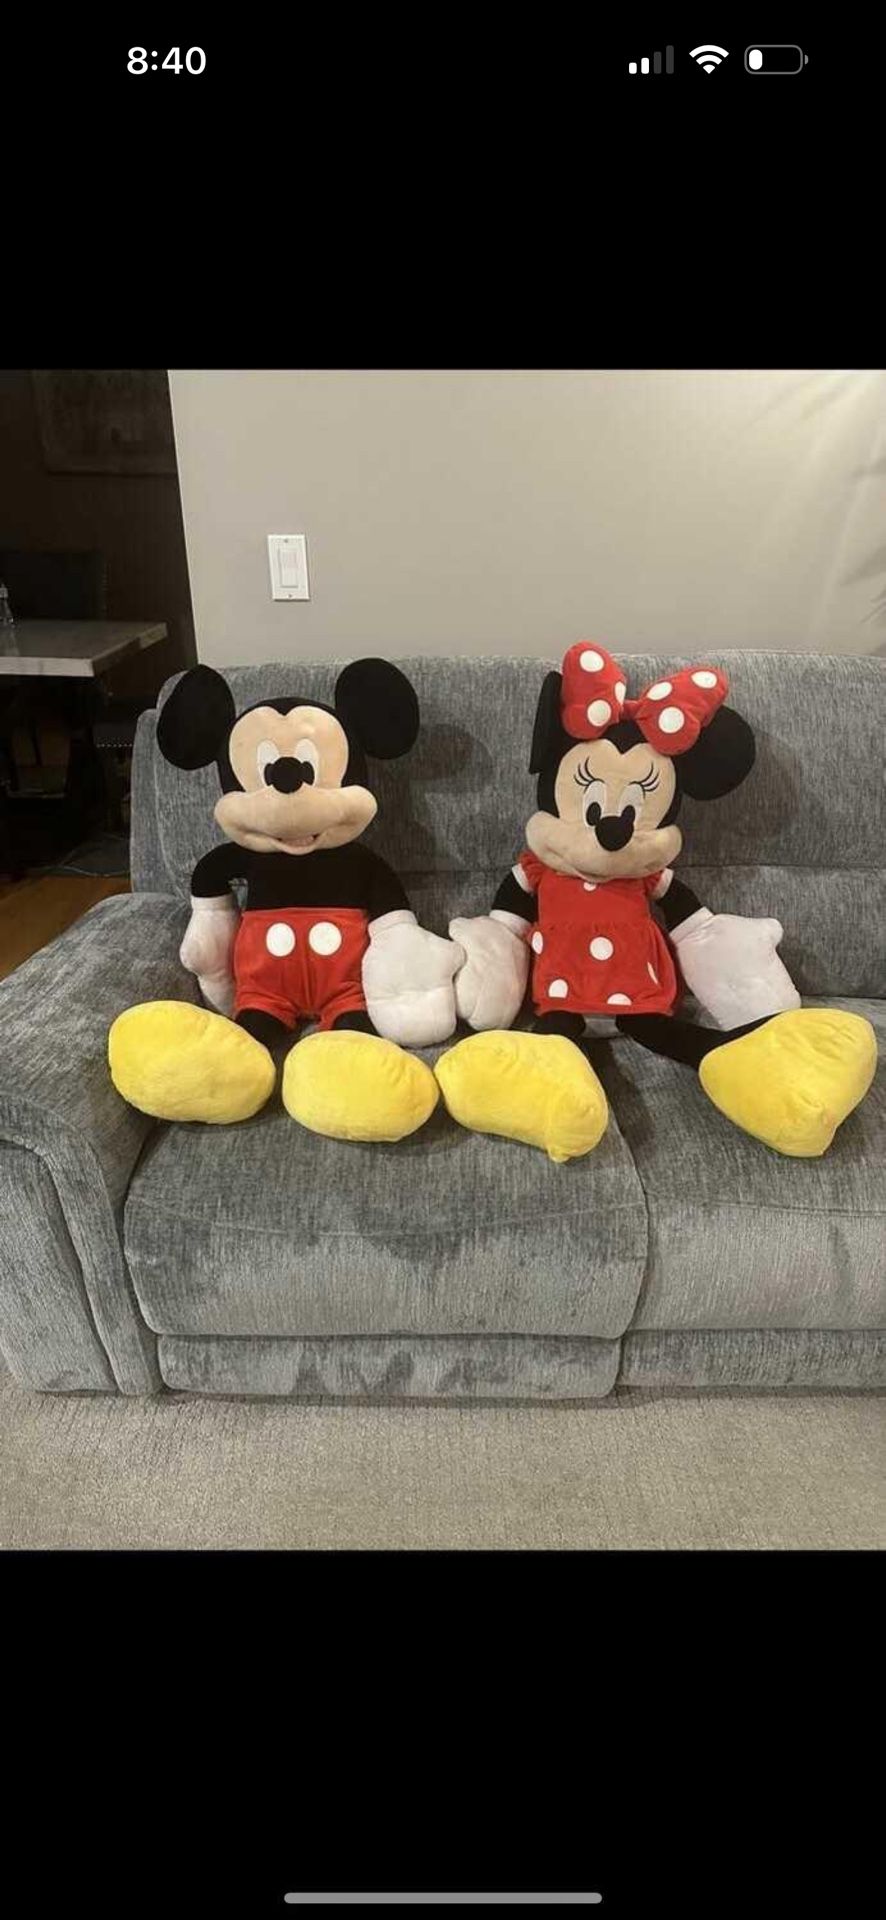 Disney baby Mickey and Minnie Mouse jumbo stuffed animal plush toys